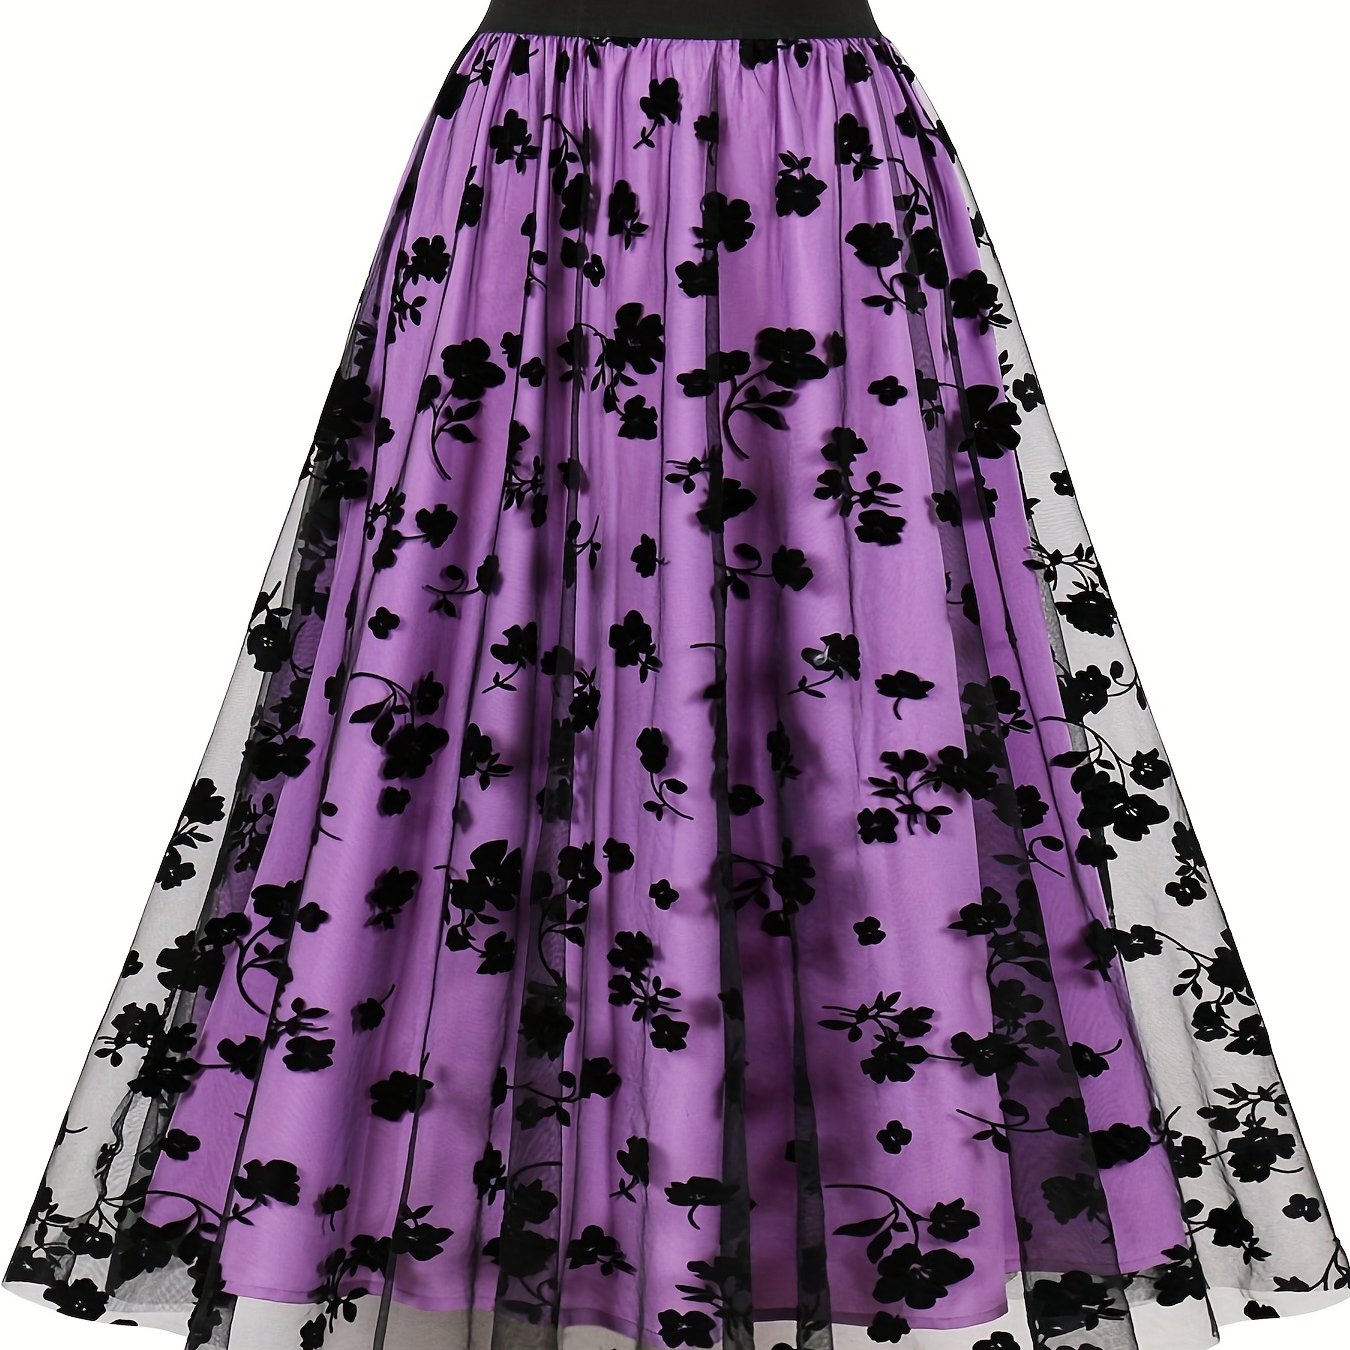 Plus Size Floral Print Mesh High Rise A-line Skirts, Women's Plus Elegant Slight Stretch Loose Fit Maxi Skirts